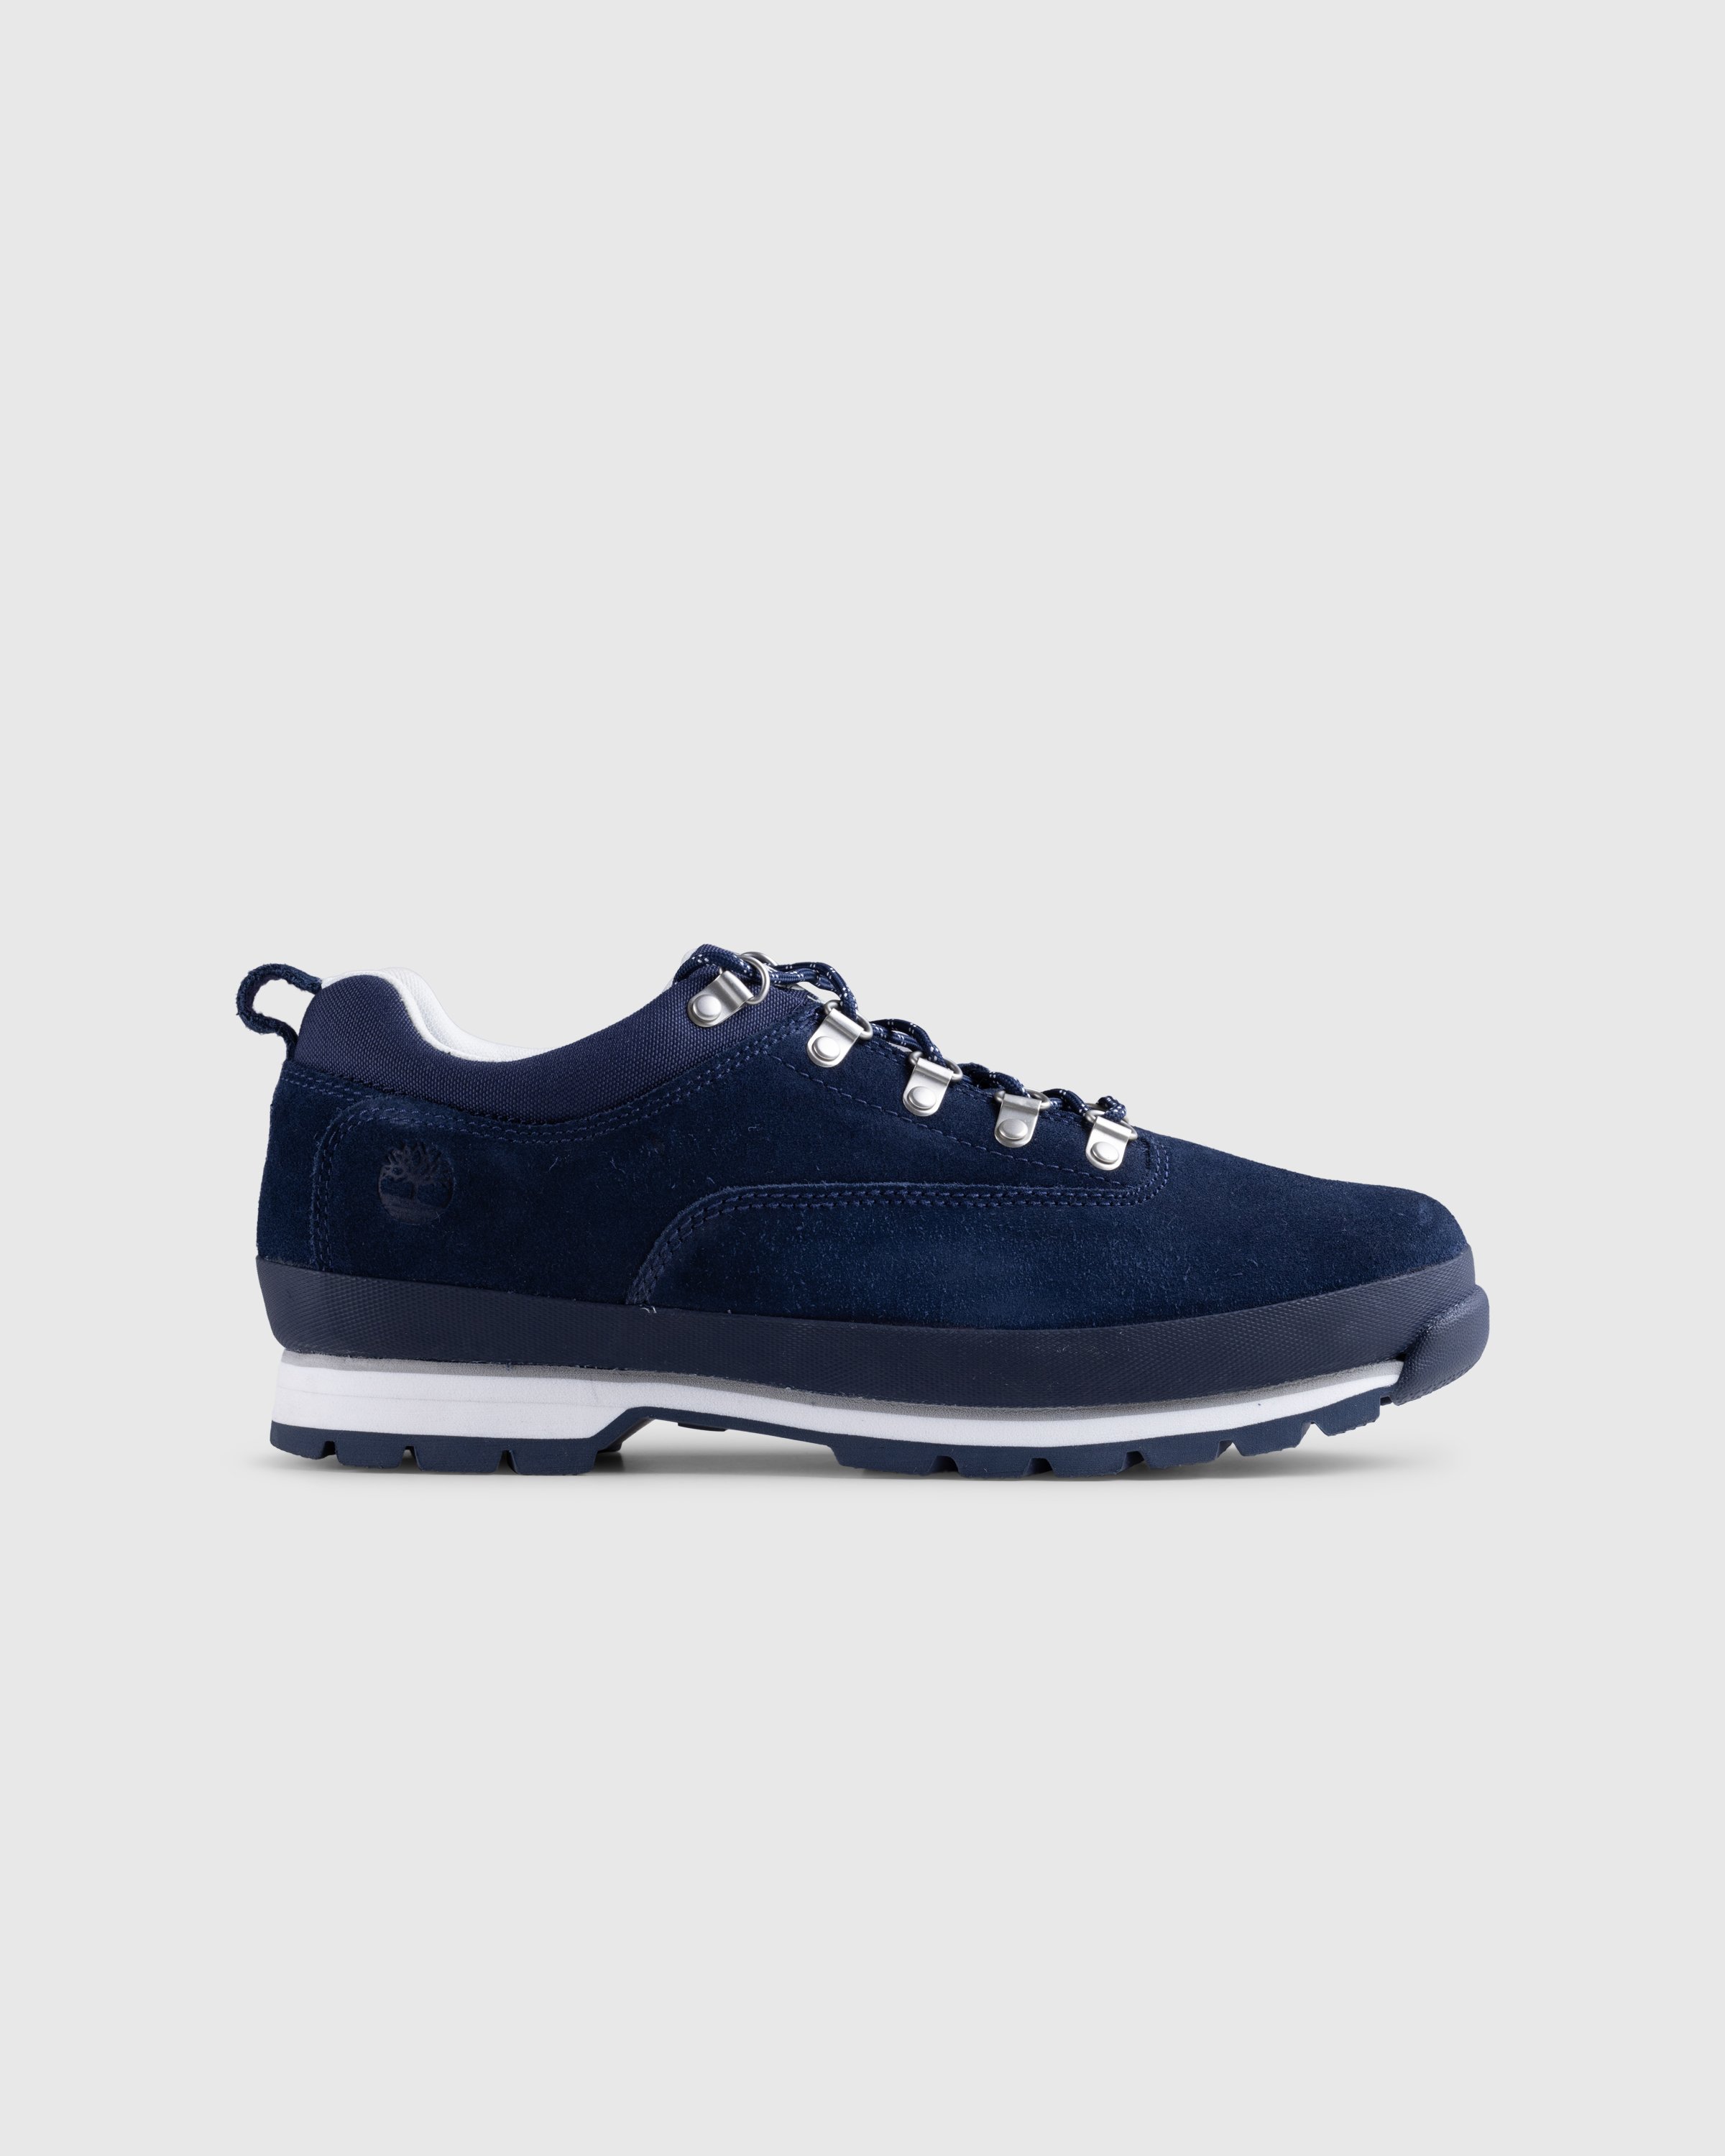 Timberland - Euro Hiker Low Navy - Footwear - Blue - Image 1